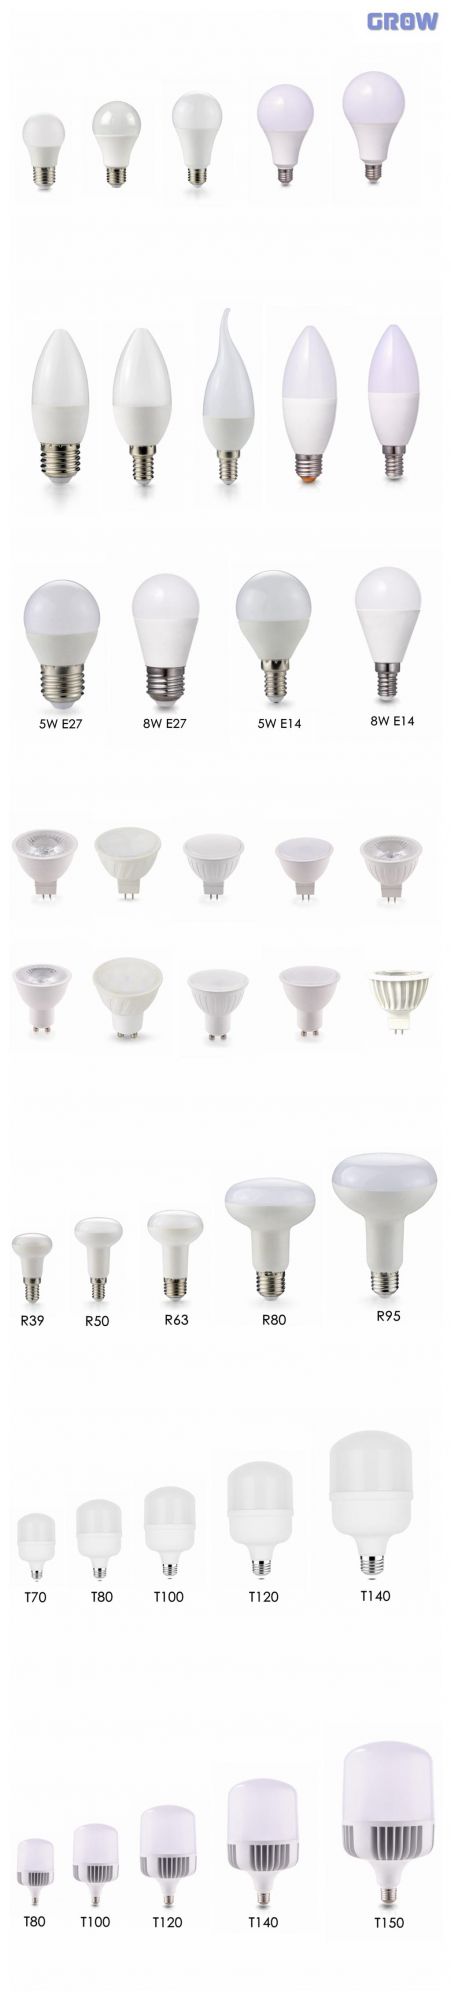 LED Bulb Light Plastic Aluminum PC Cover E14/E27 R Series Lamp LED Light Bulb Lamp for Home Decoration and Indoor Lighting